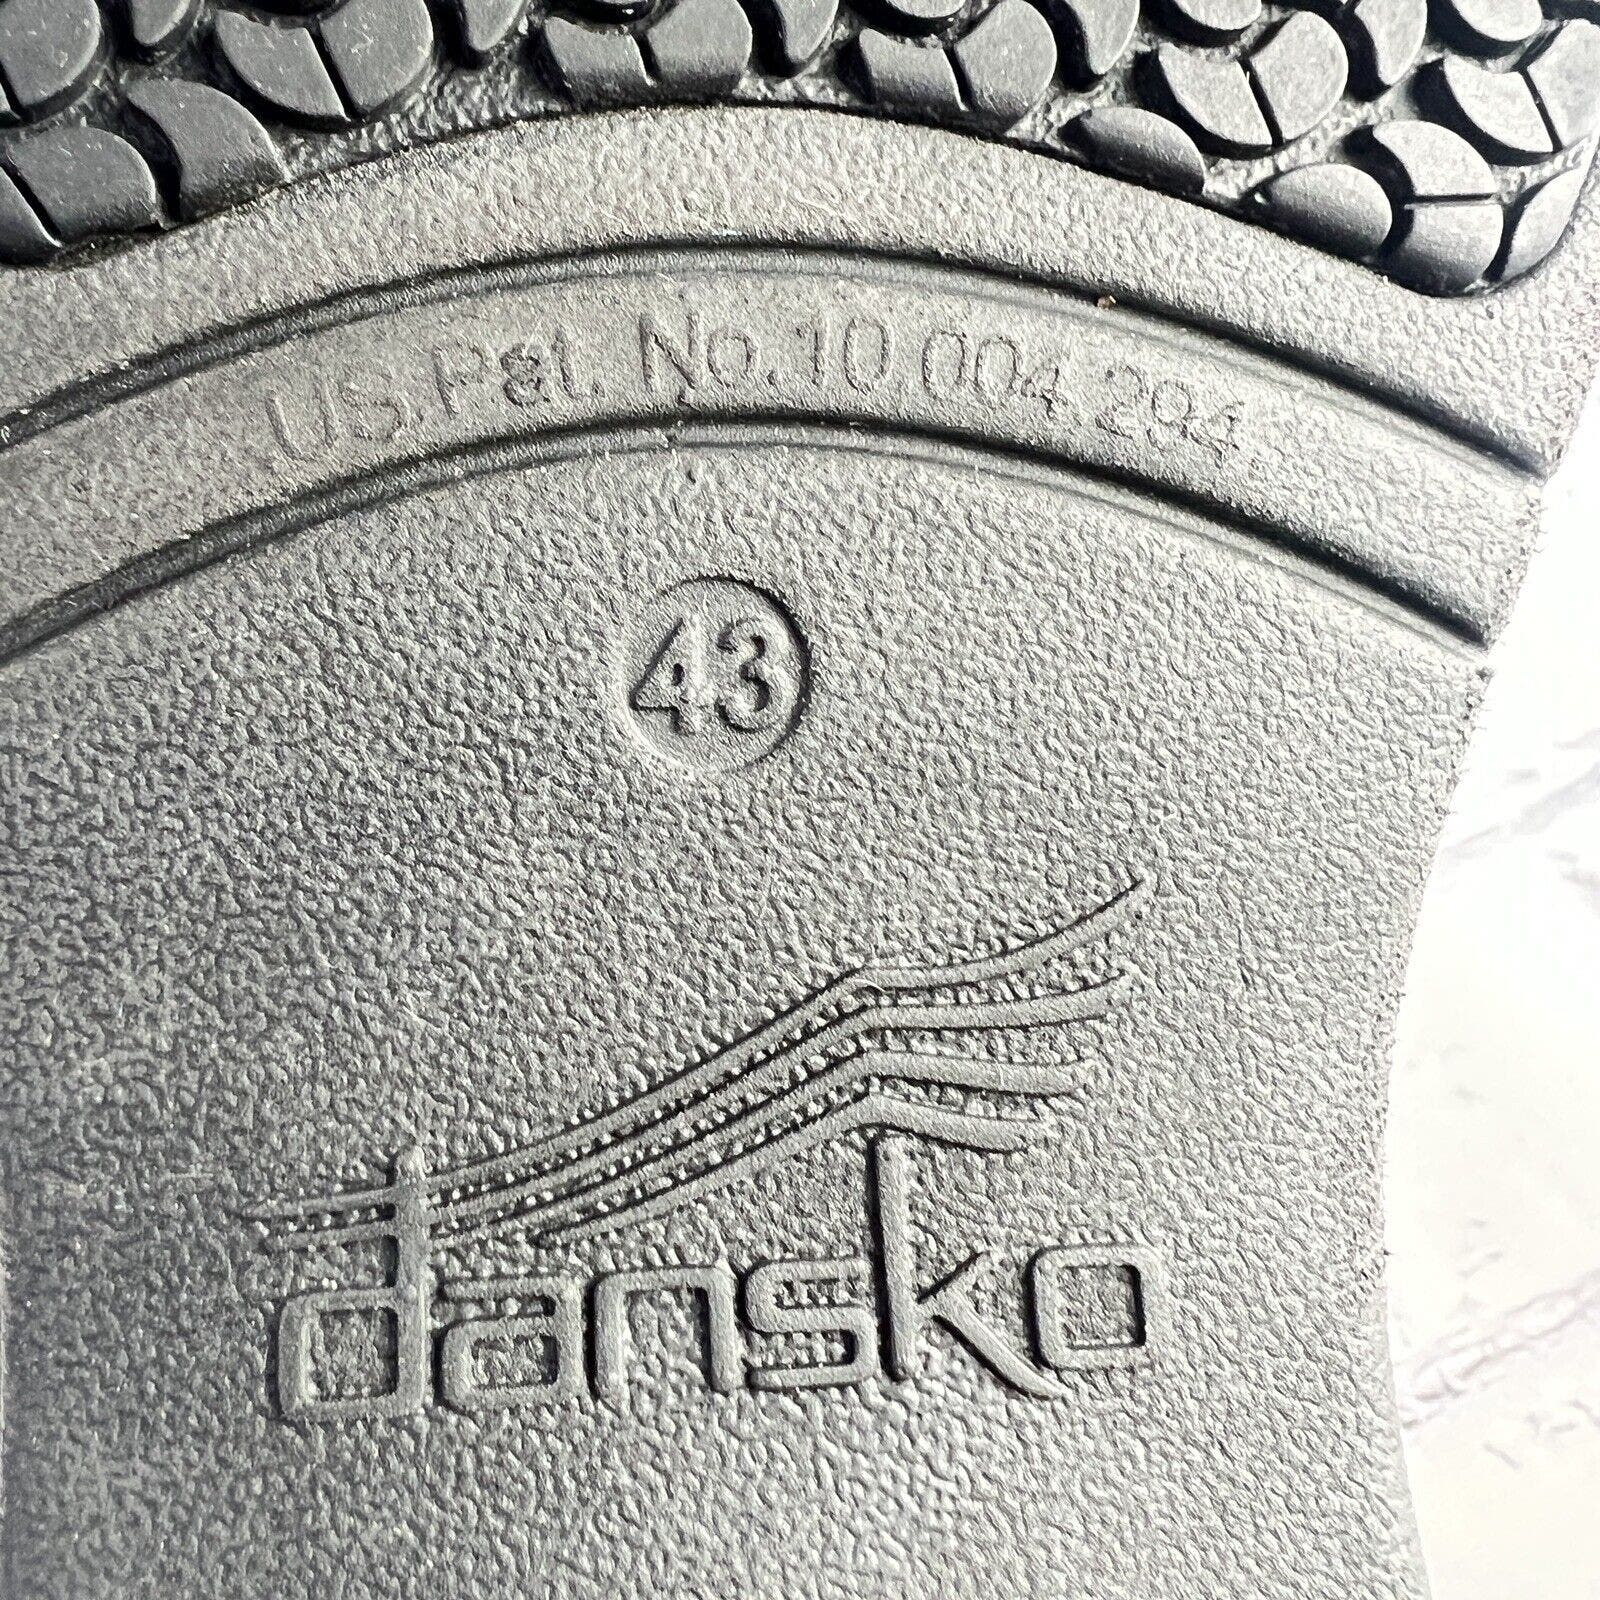 Dansko XP 2.0 Clogs Womens 43 (US 12.5 - 13) Matte Black Leather Comfort Shoe